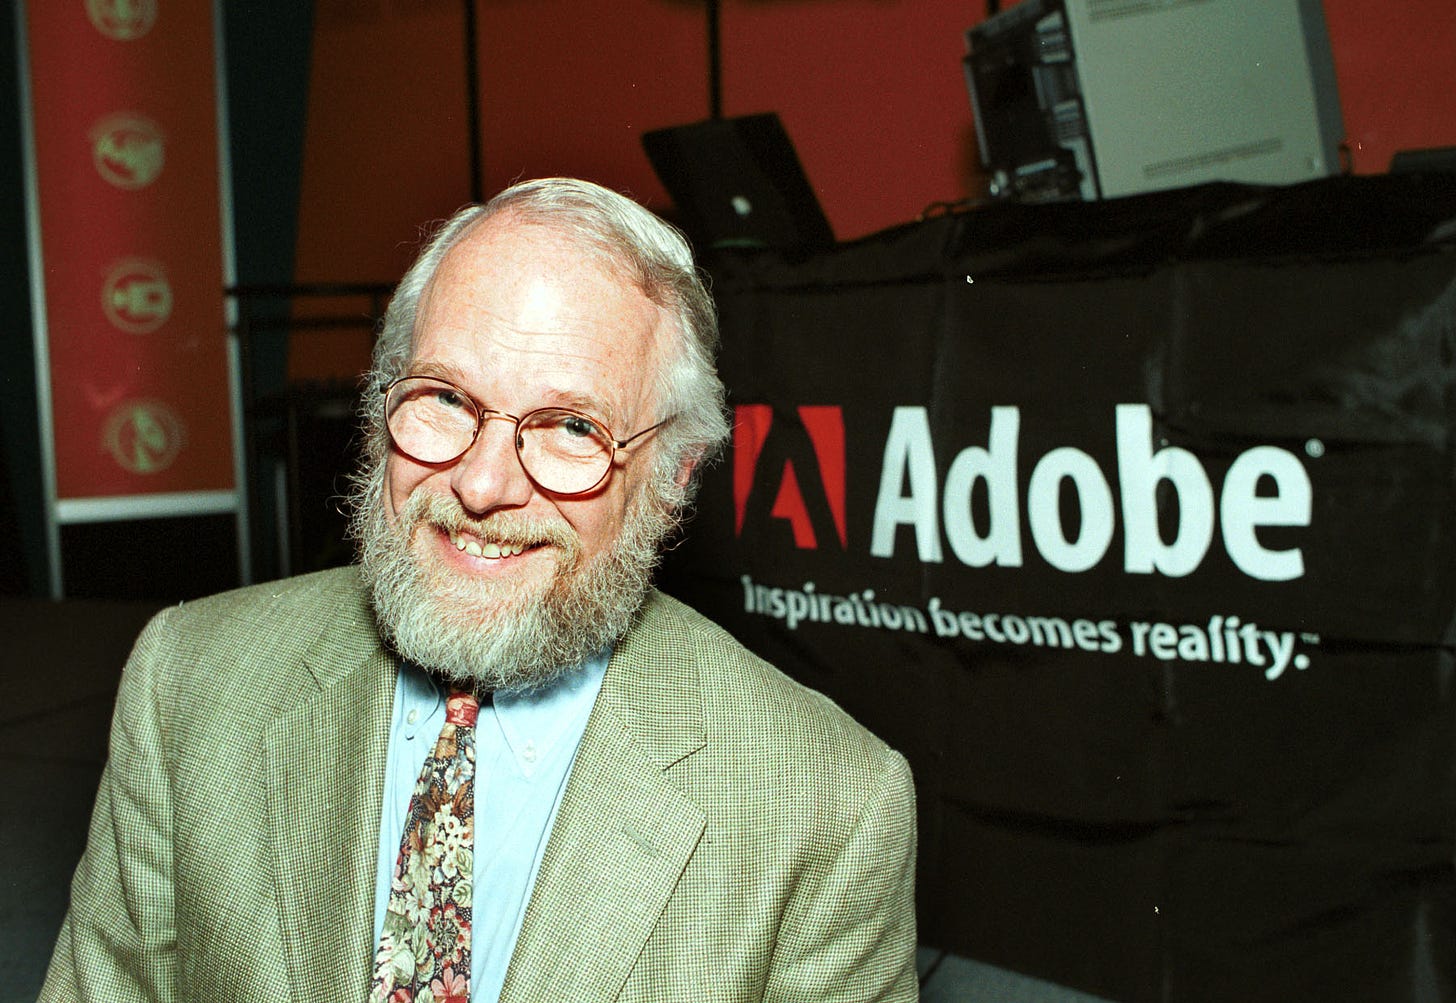 Adobe's Co-Founder John Warnock Dies at 82 - Bloomberg